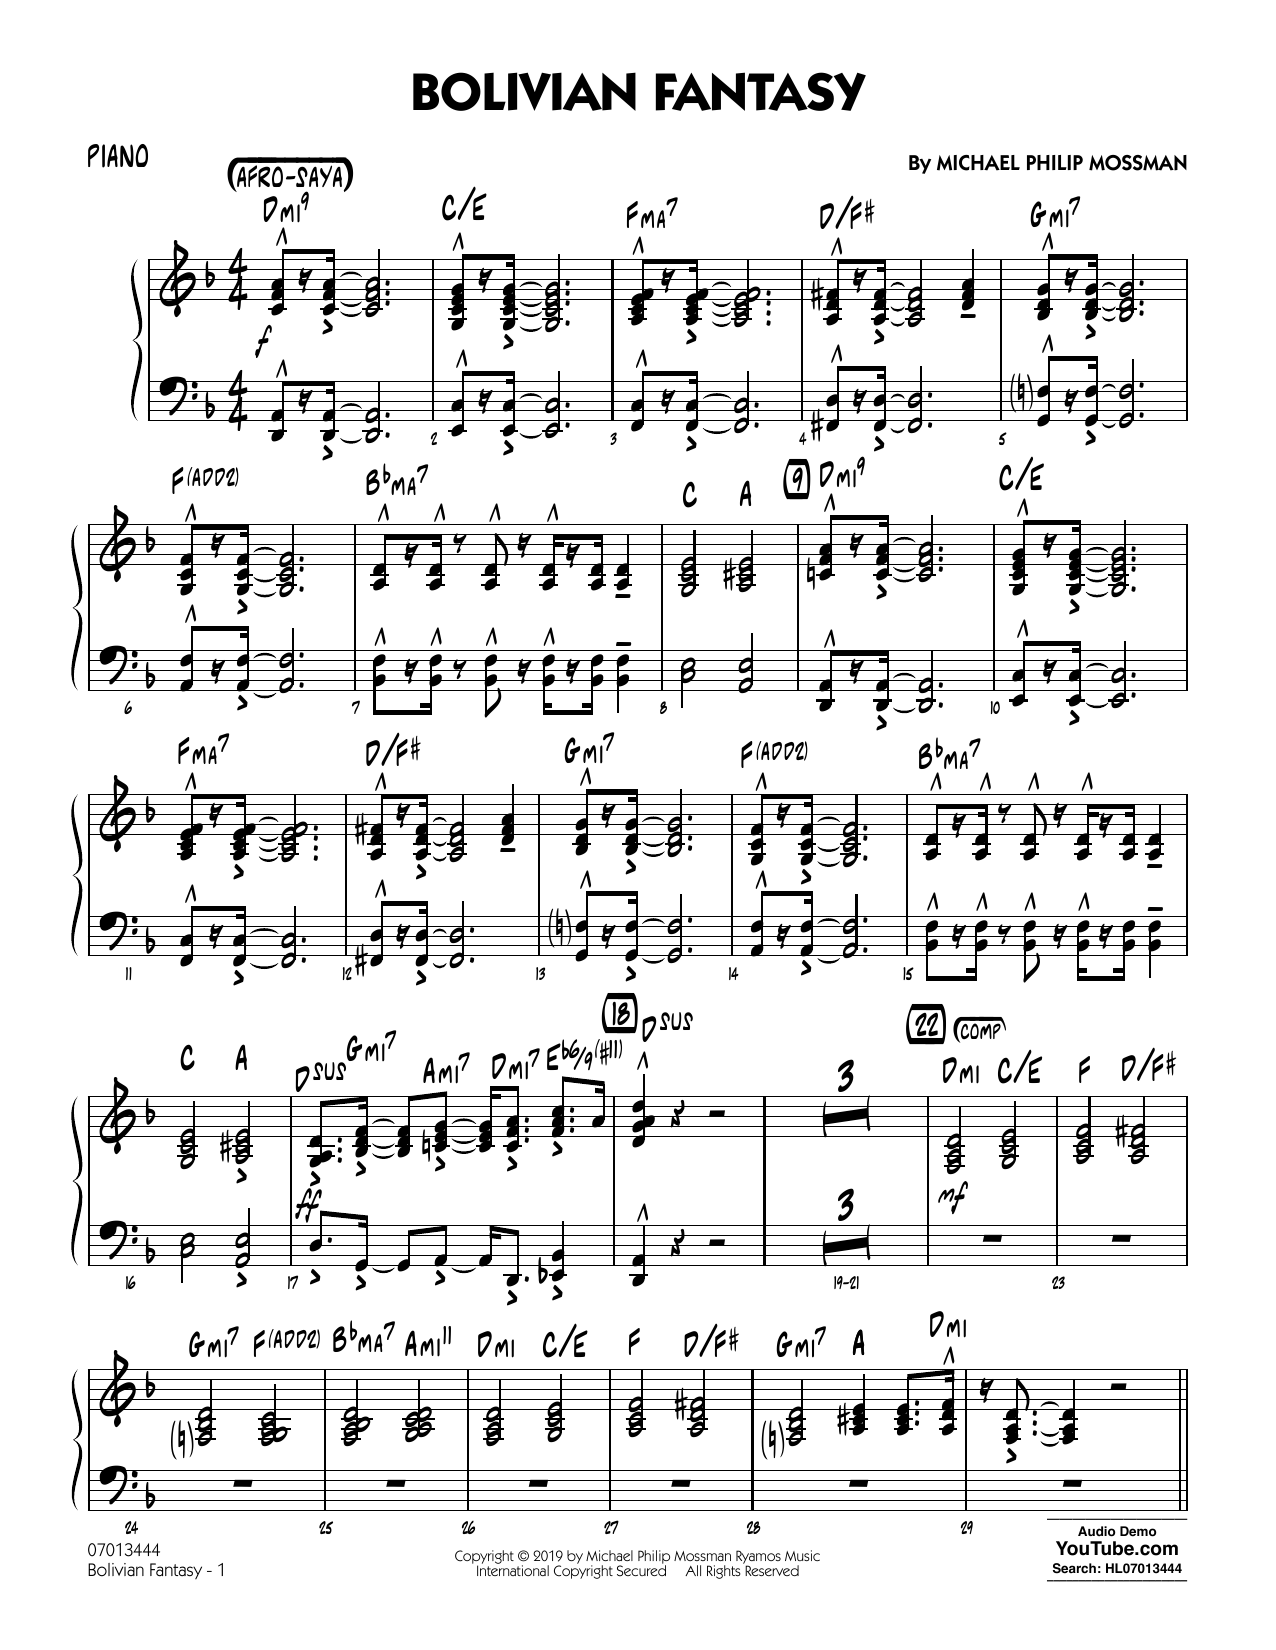 Michael Philip Mossman Bolivian Fantasy - Piano Sheet Music Notes & Chords for Jazz Ensemble - Download or Print PDF